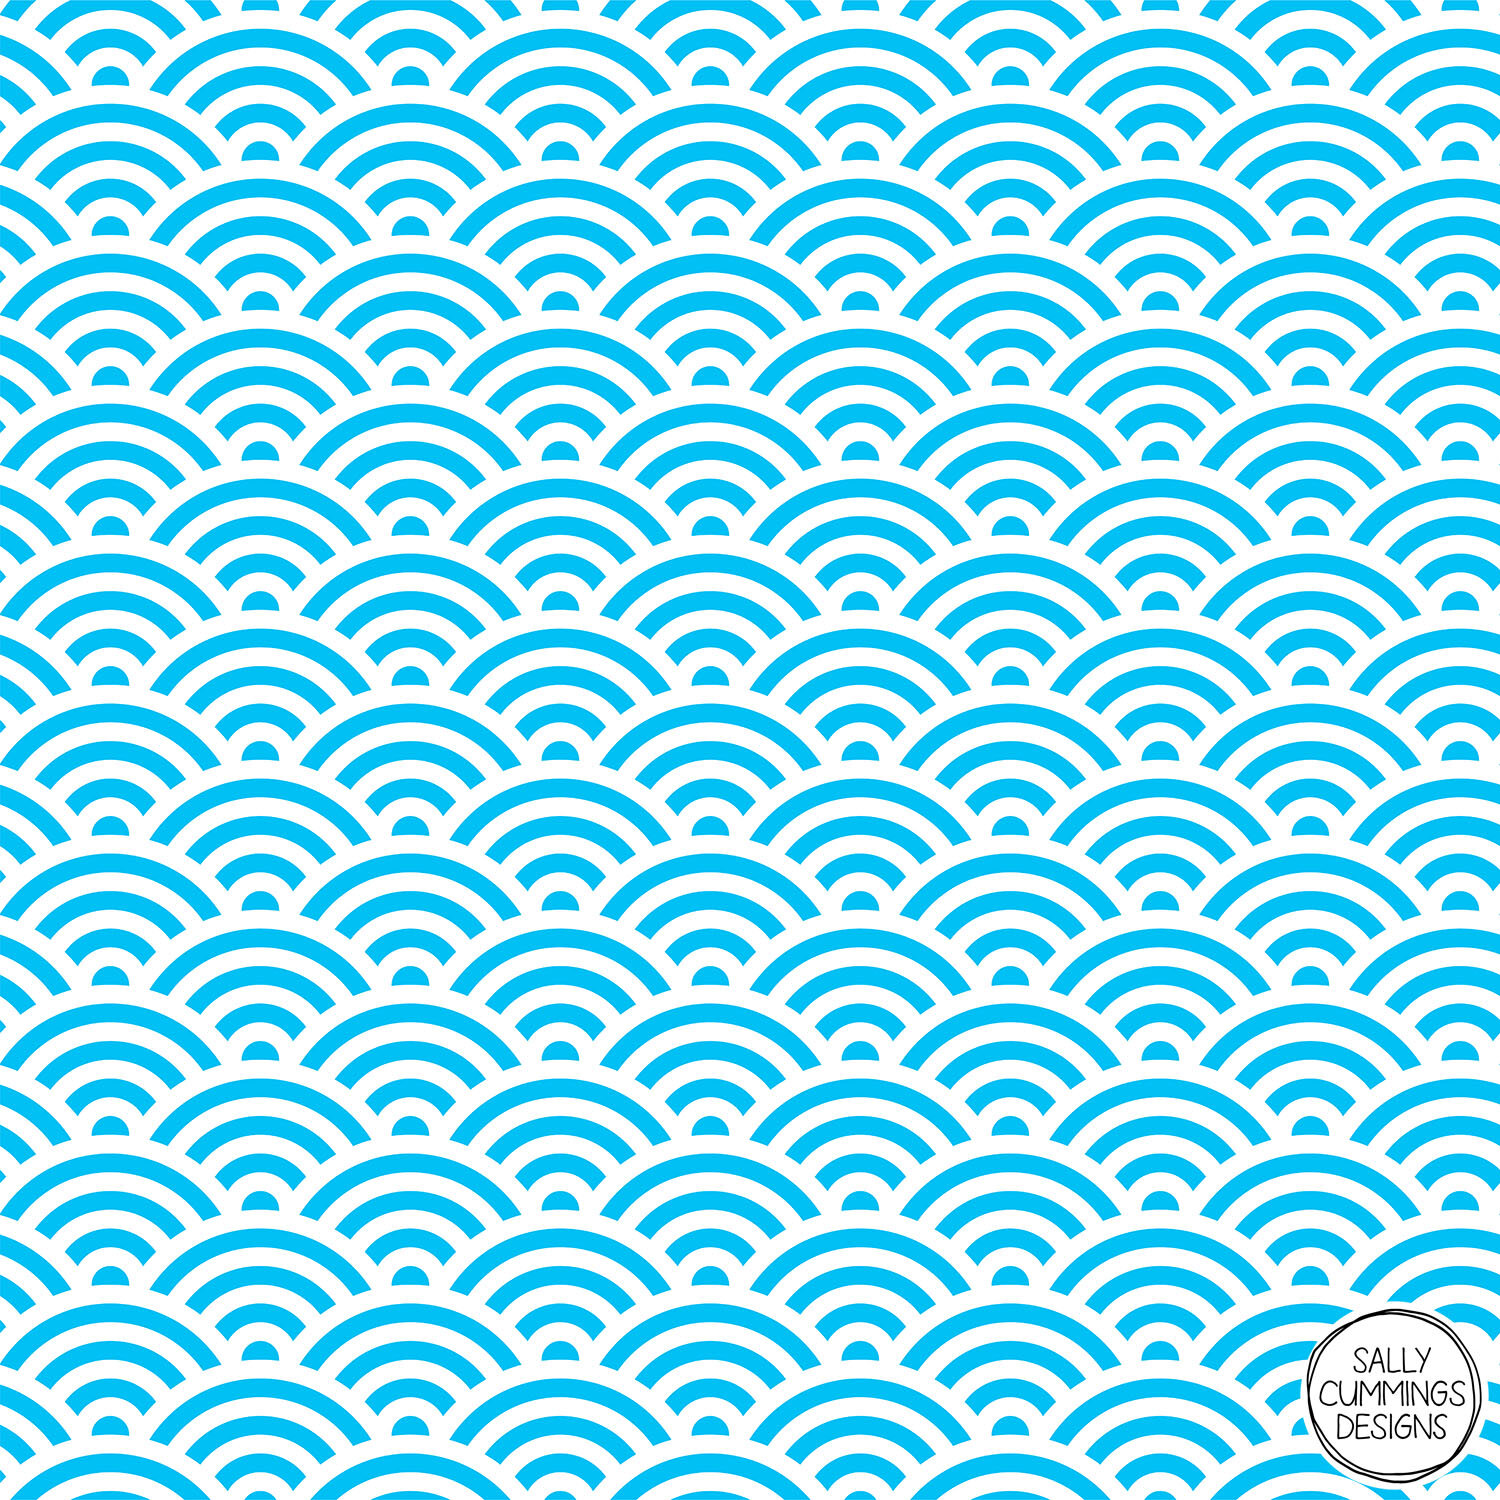 Sally Cummings Designs - Aqua Seigaiha Wave Crest Pattern